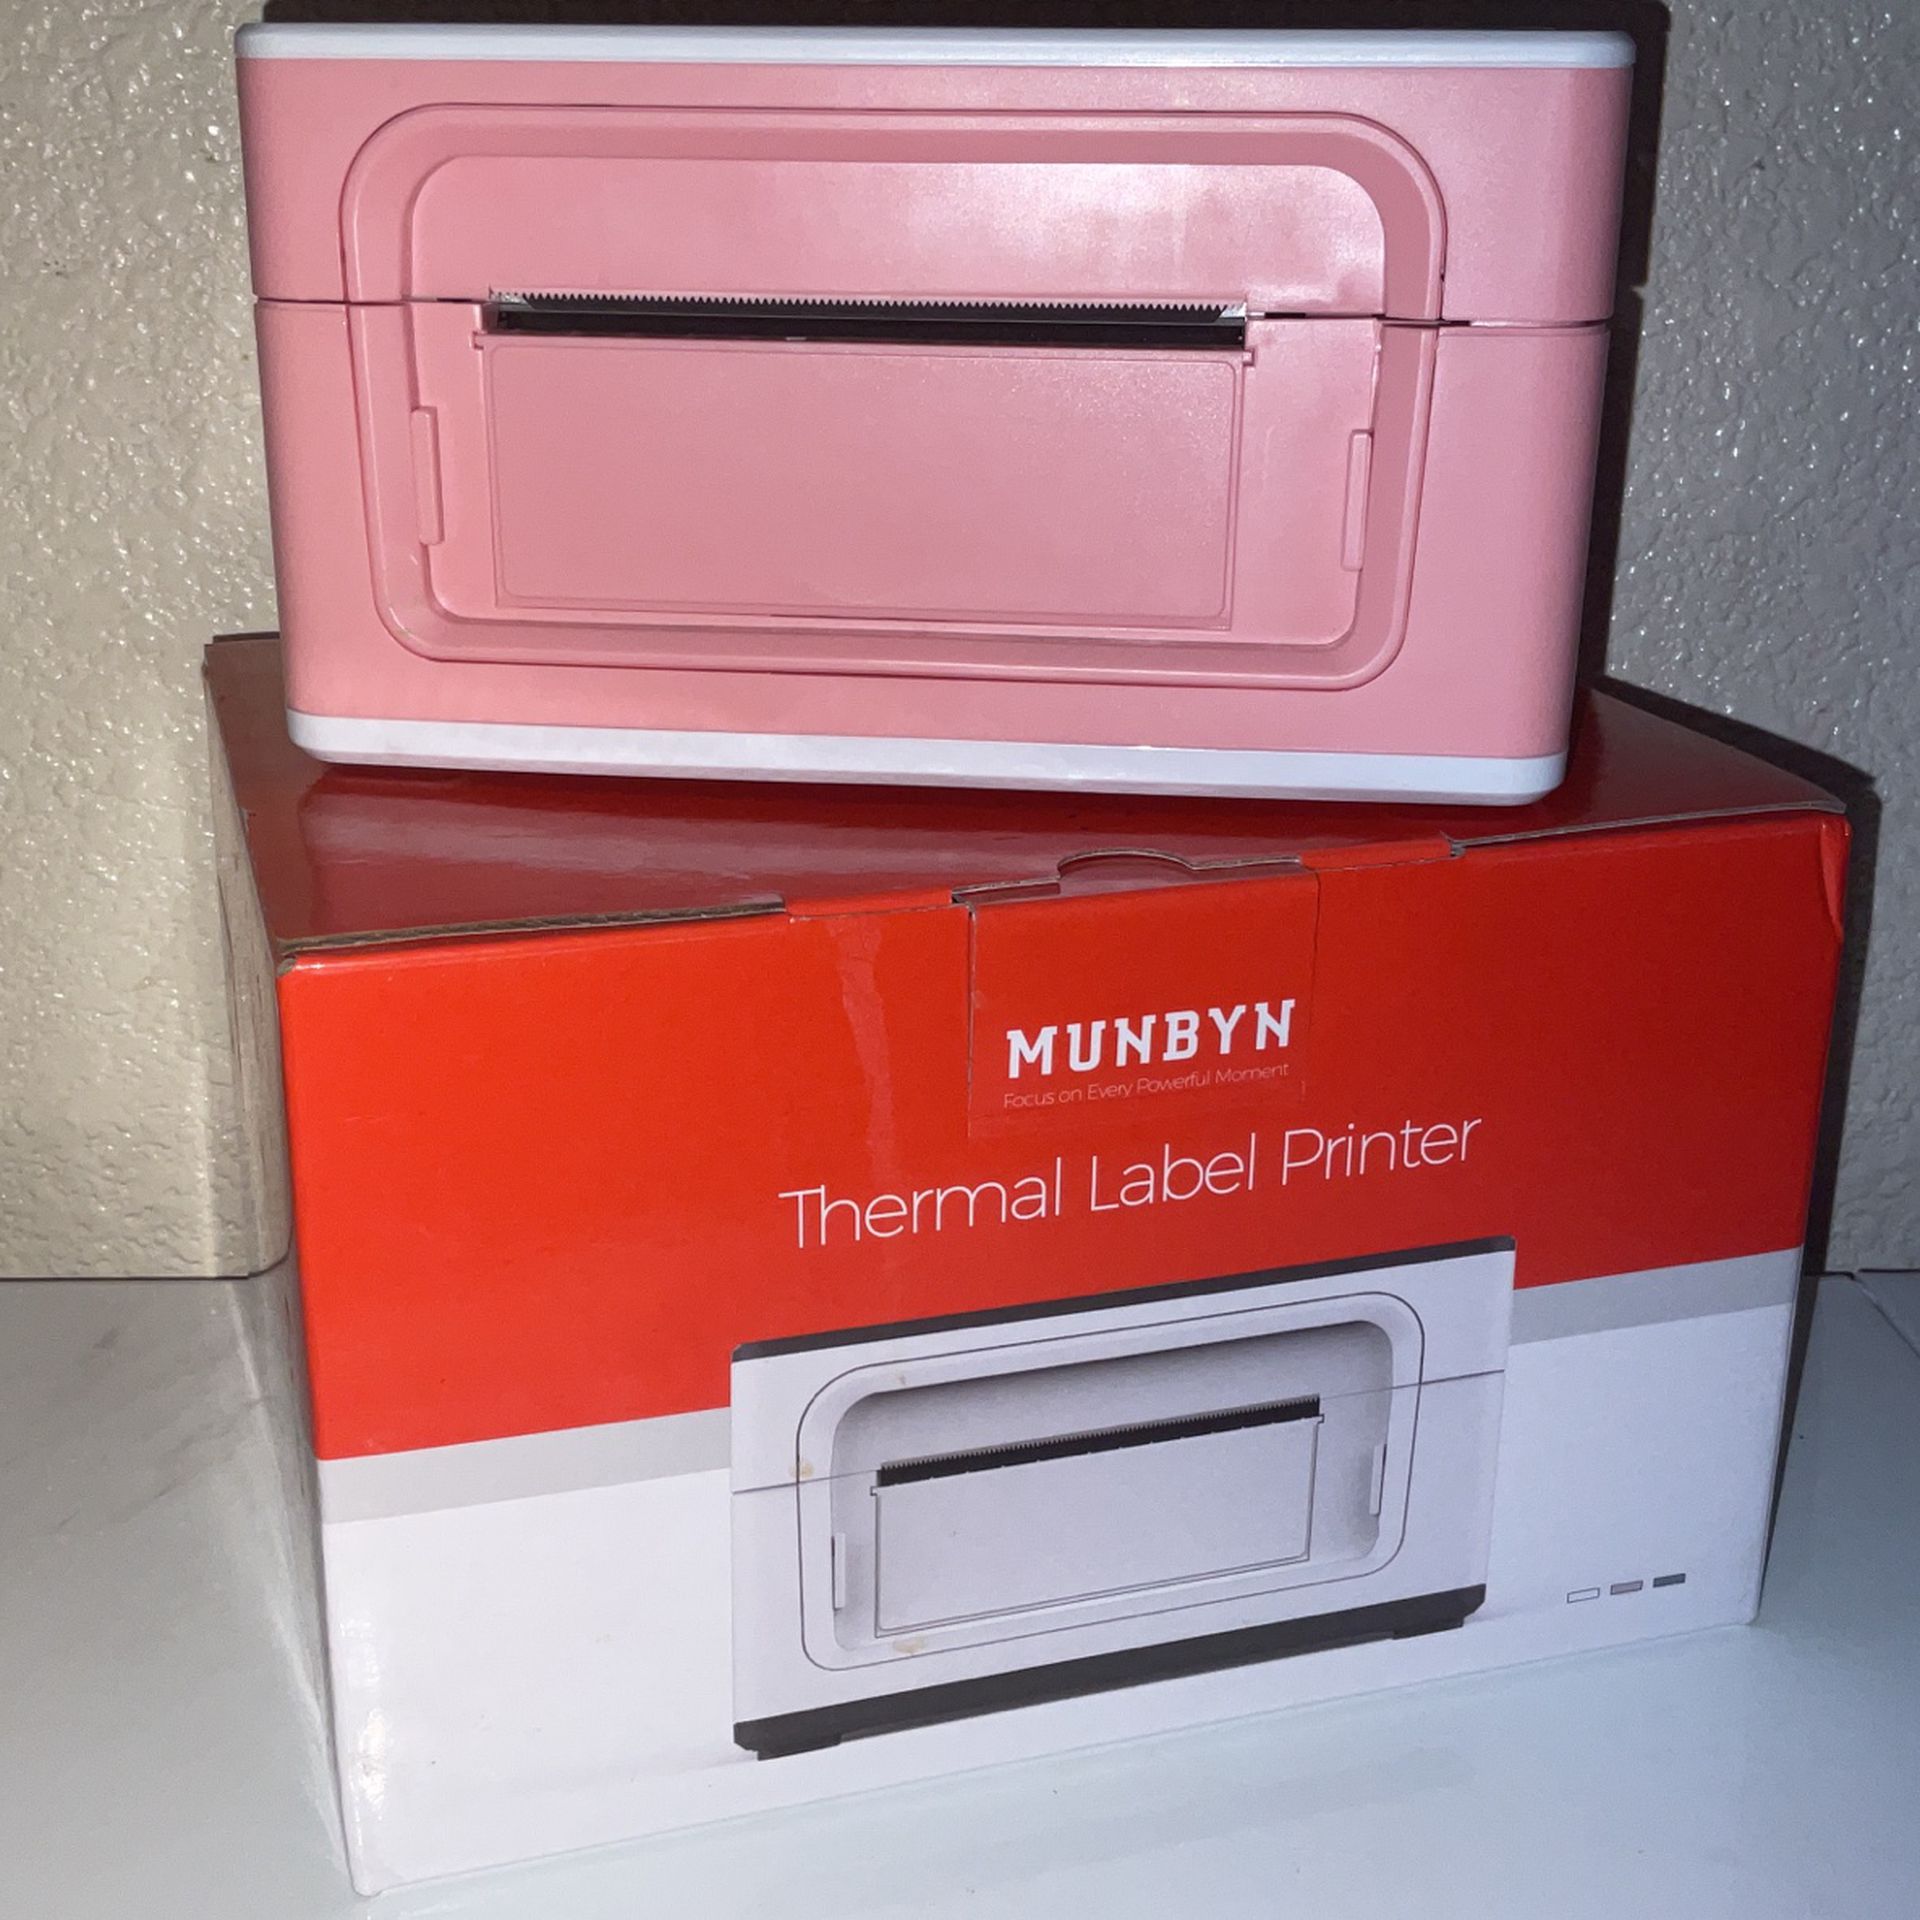 Munbyn Thermal Label Printer